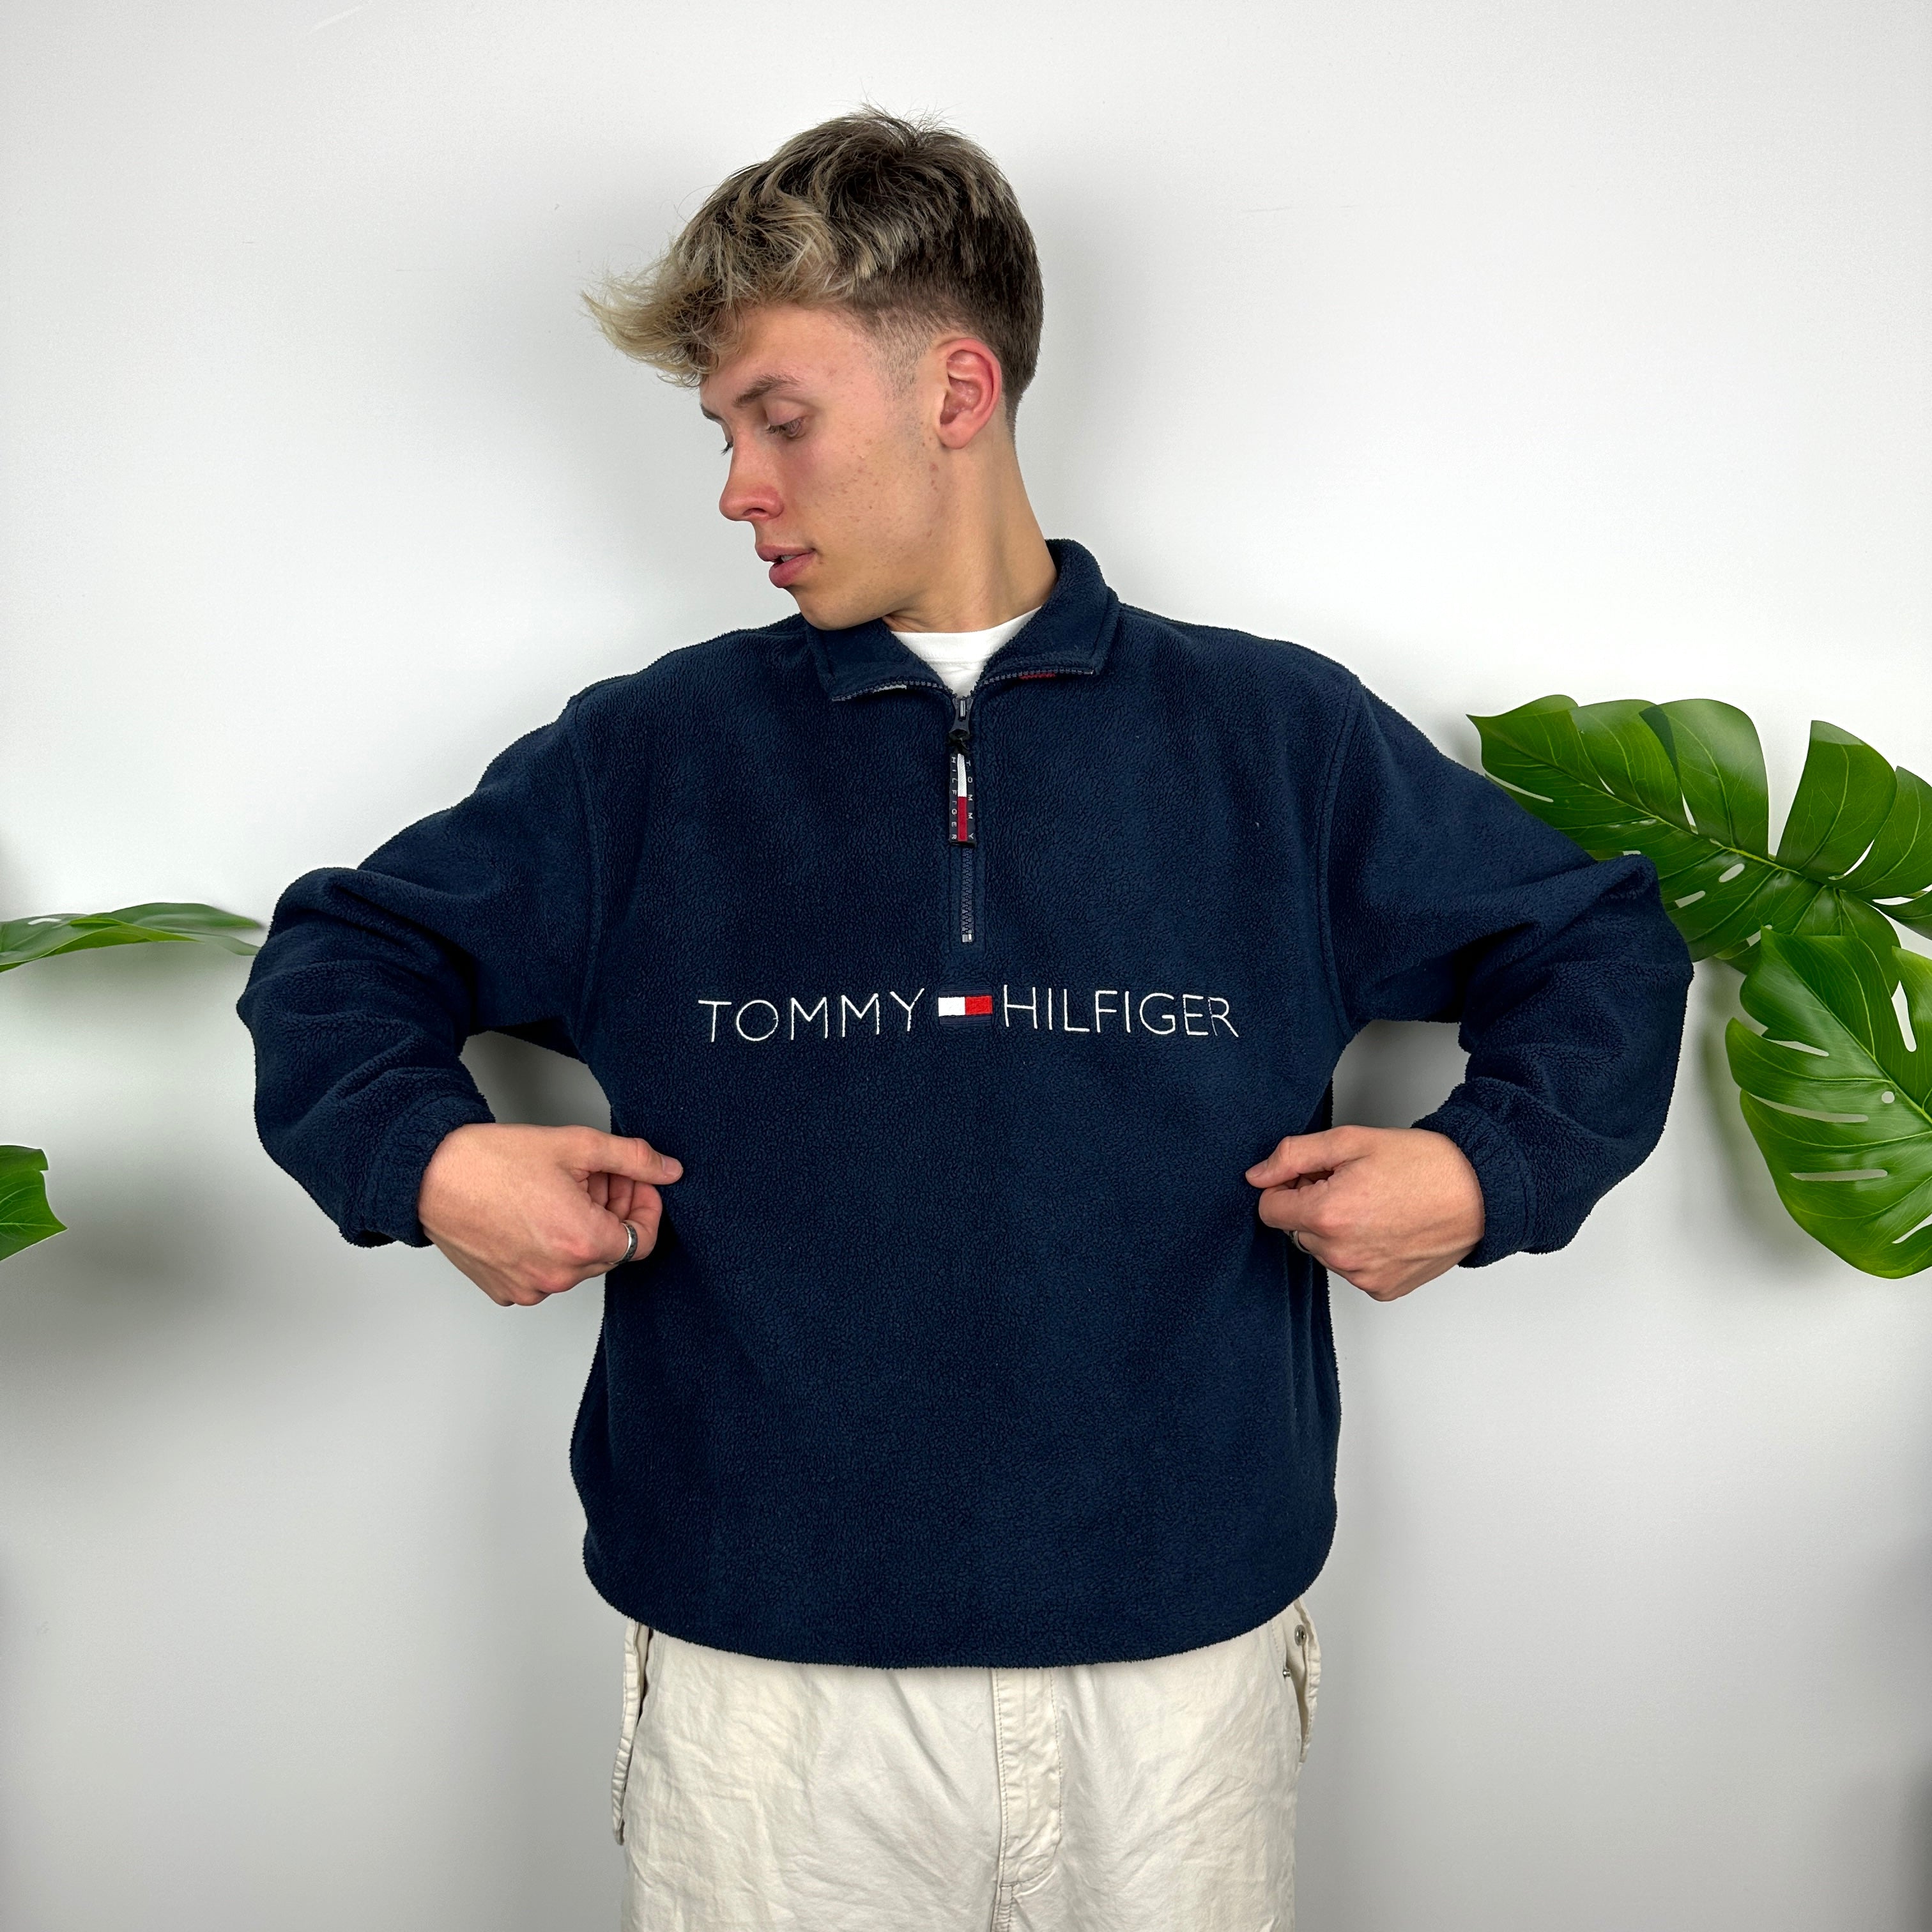 Tommy Hilfiger Navy Embroidered Spell Out Teddy Bear Fleece Quarter Zip Sweatshirt (M)